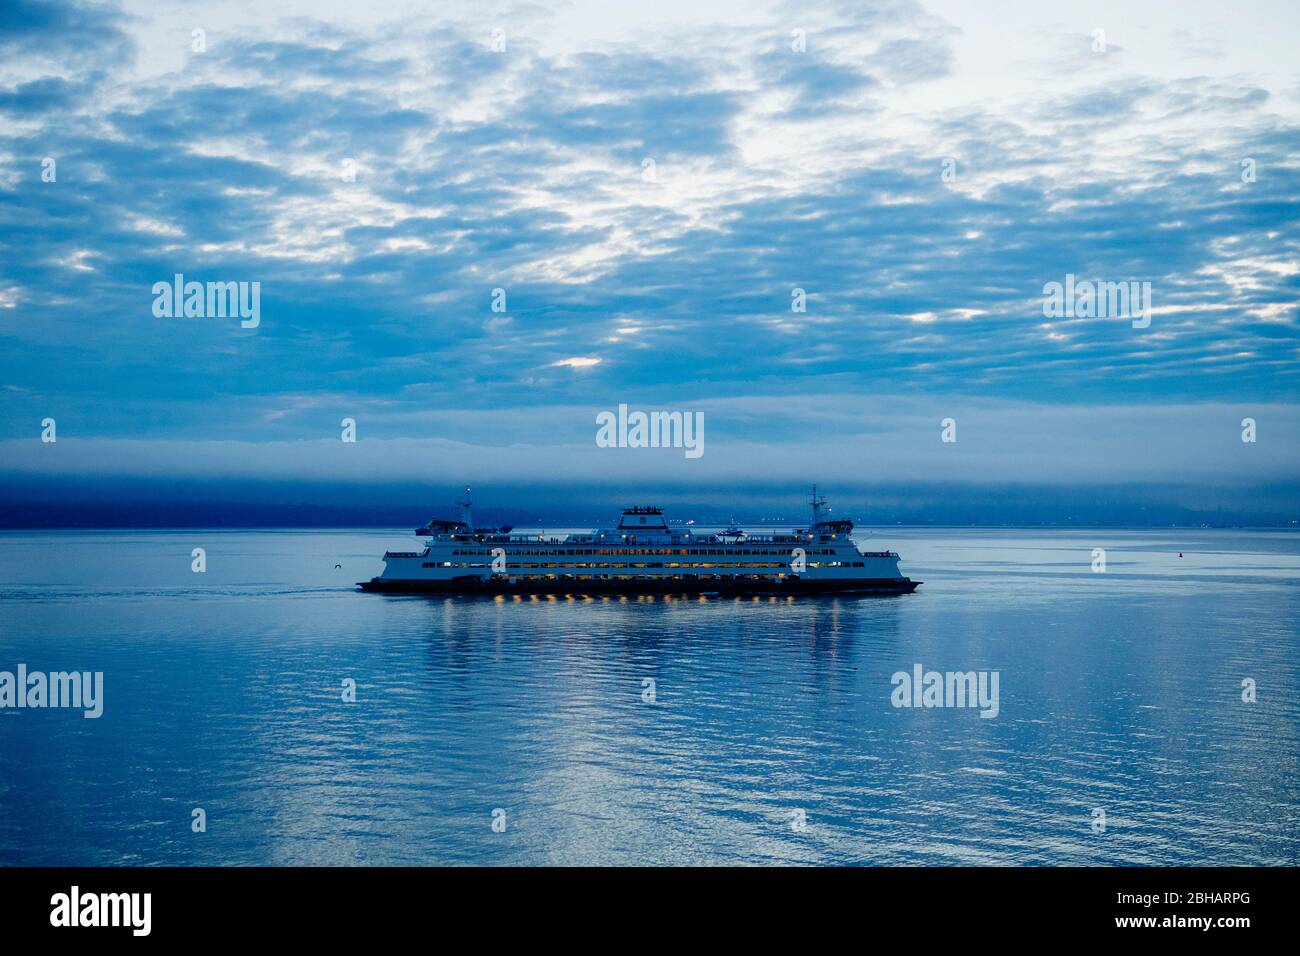 Ferry against cloudy sky at dusk, Seattle, Washington, USA Stock Photo